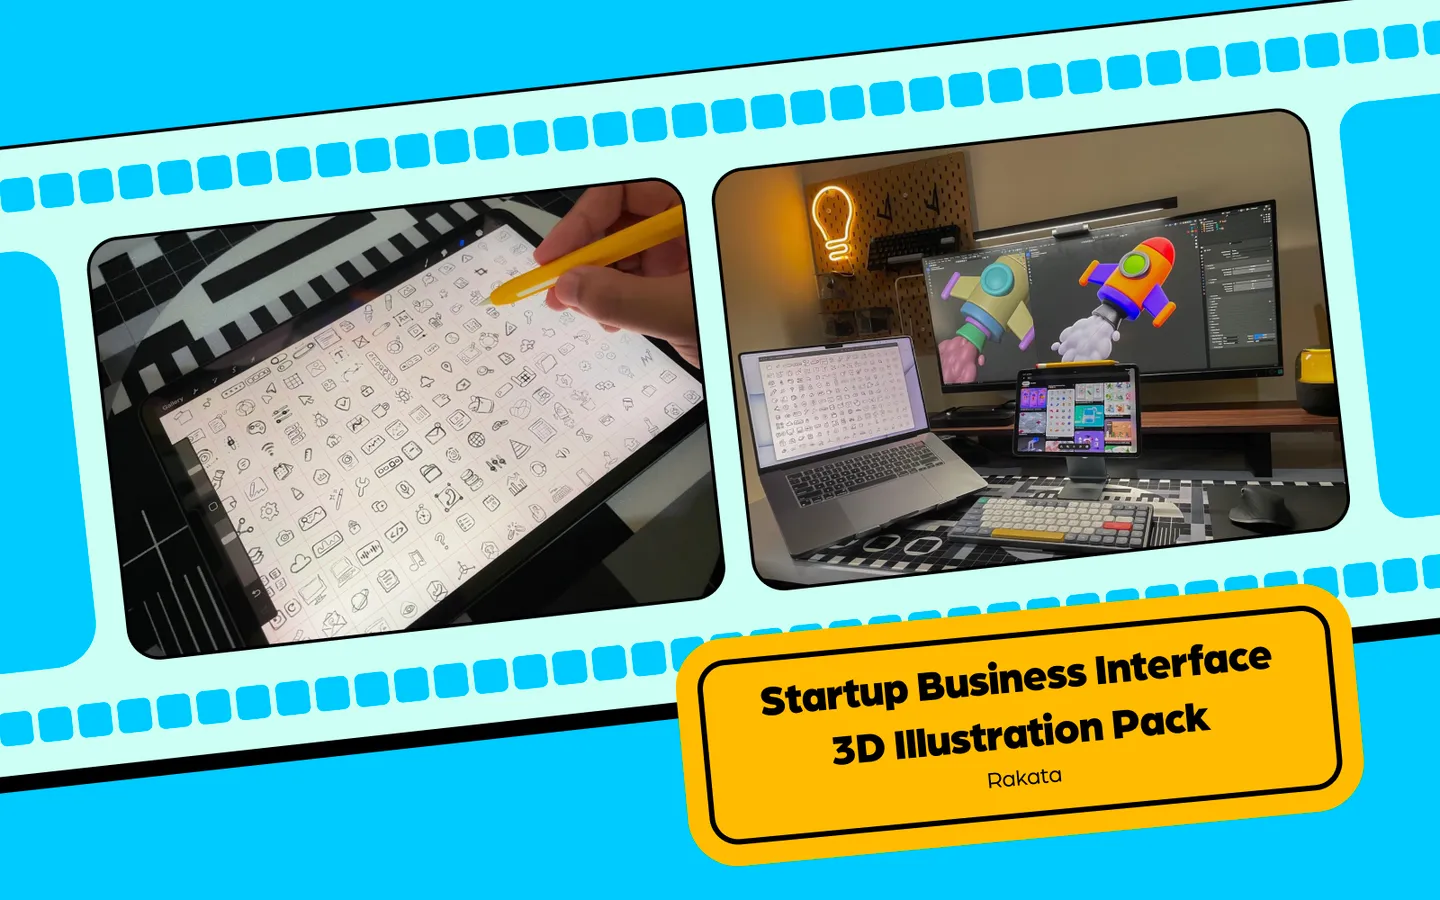 Startup Business Interface 3D Illustration Pack